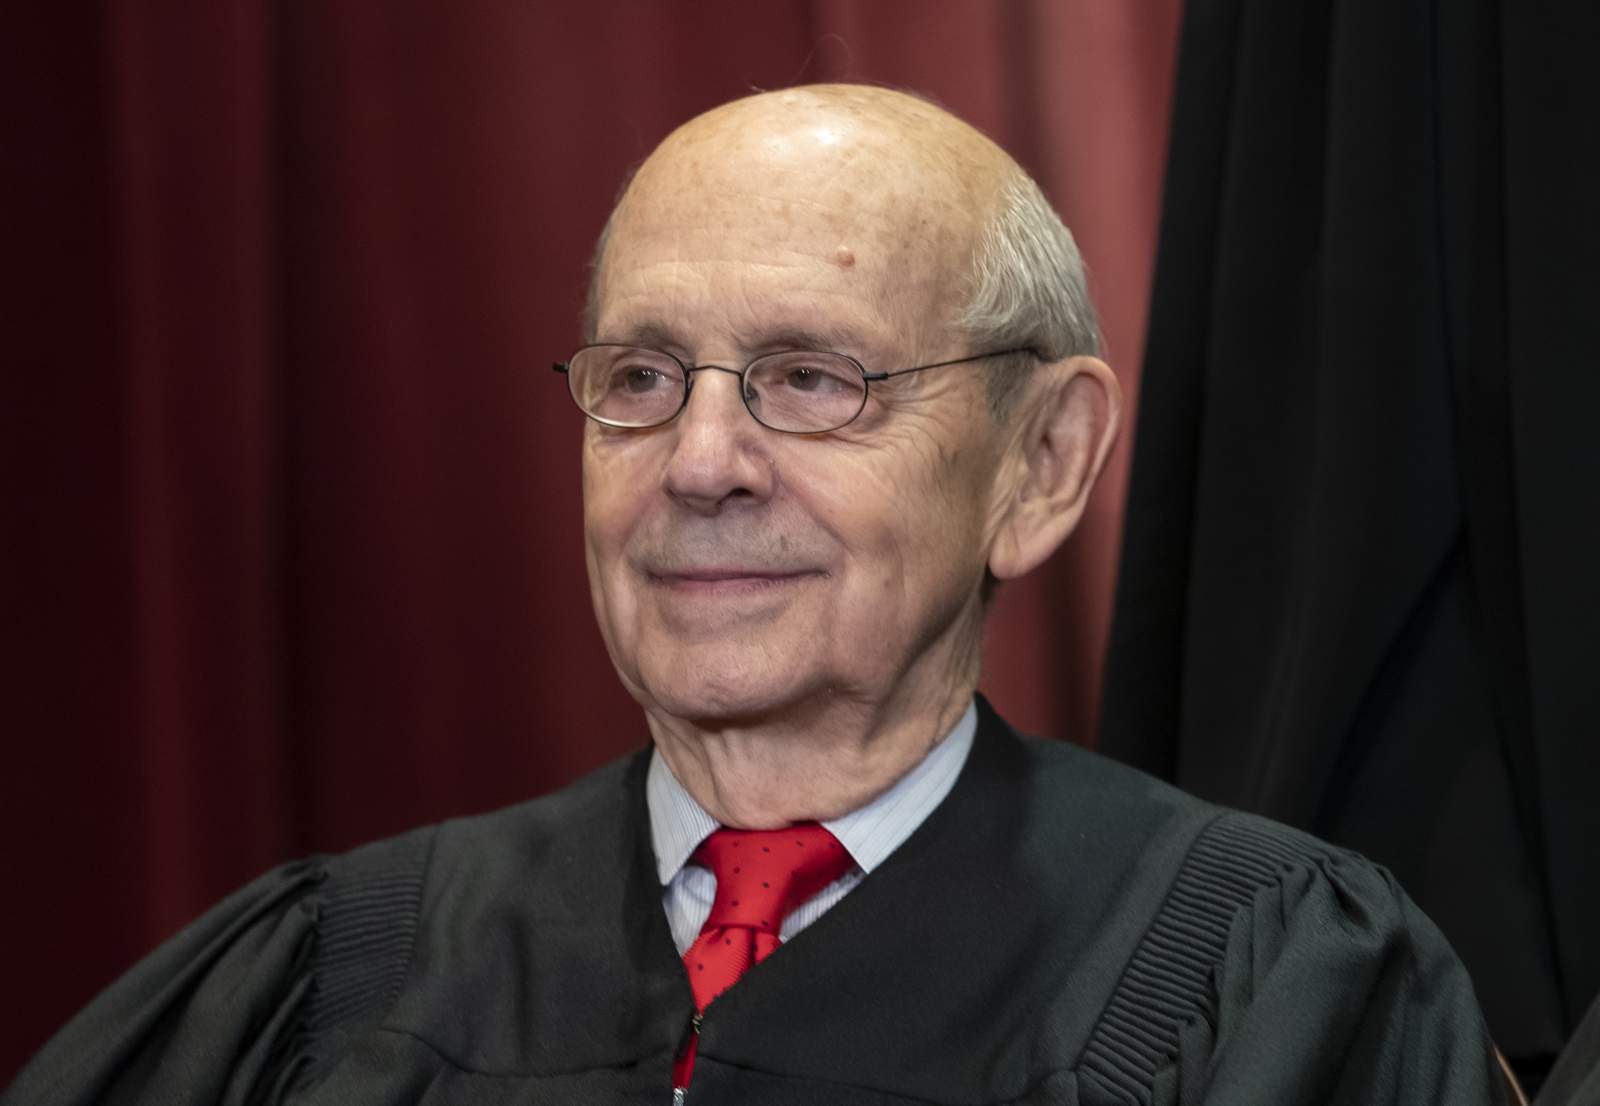 Breyer says big Supreme Court changes could diminish trust